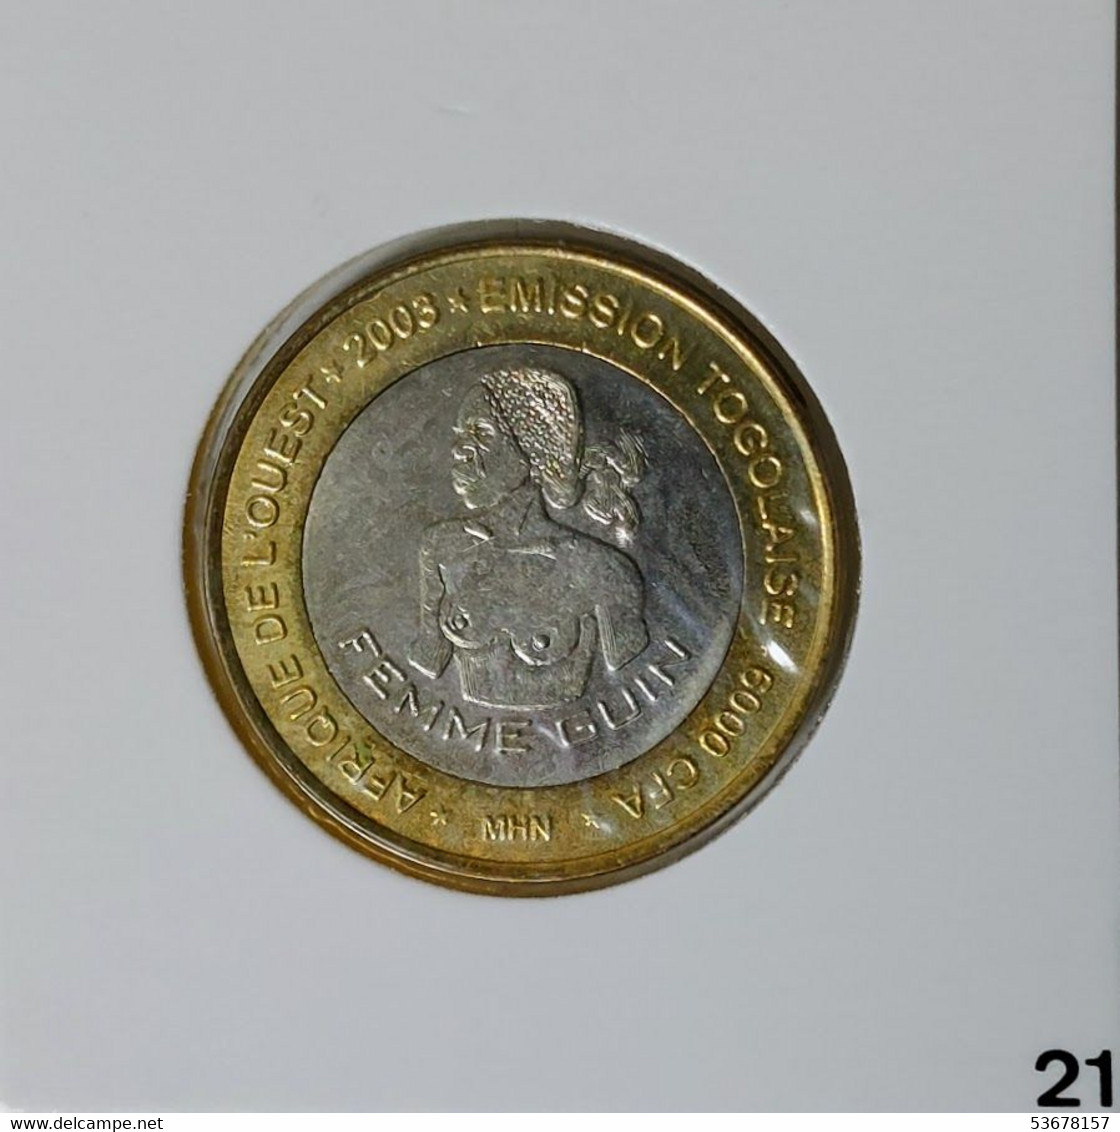 Togo - 6000 CFA Francs - 4 Africa 2003, X# 21, African Girl, Tokens (probes), (#1446) - Togo